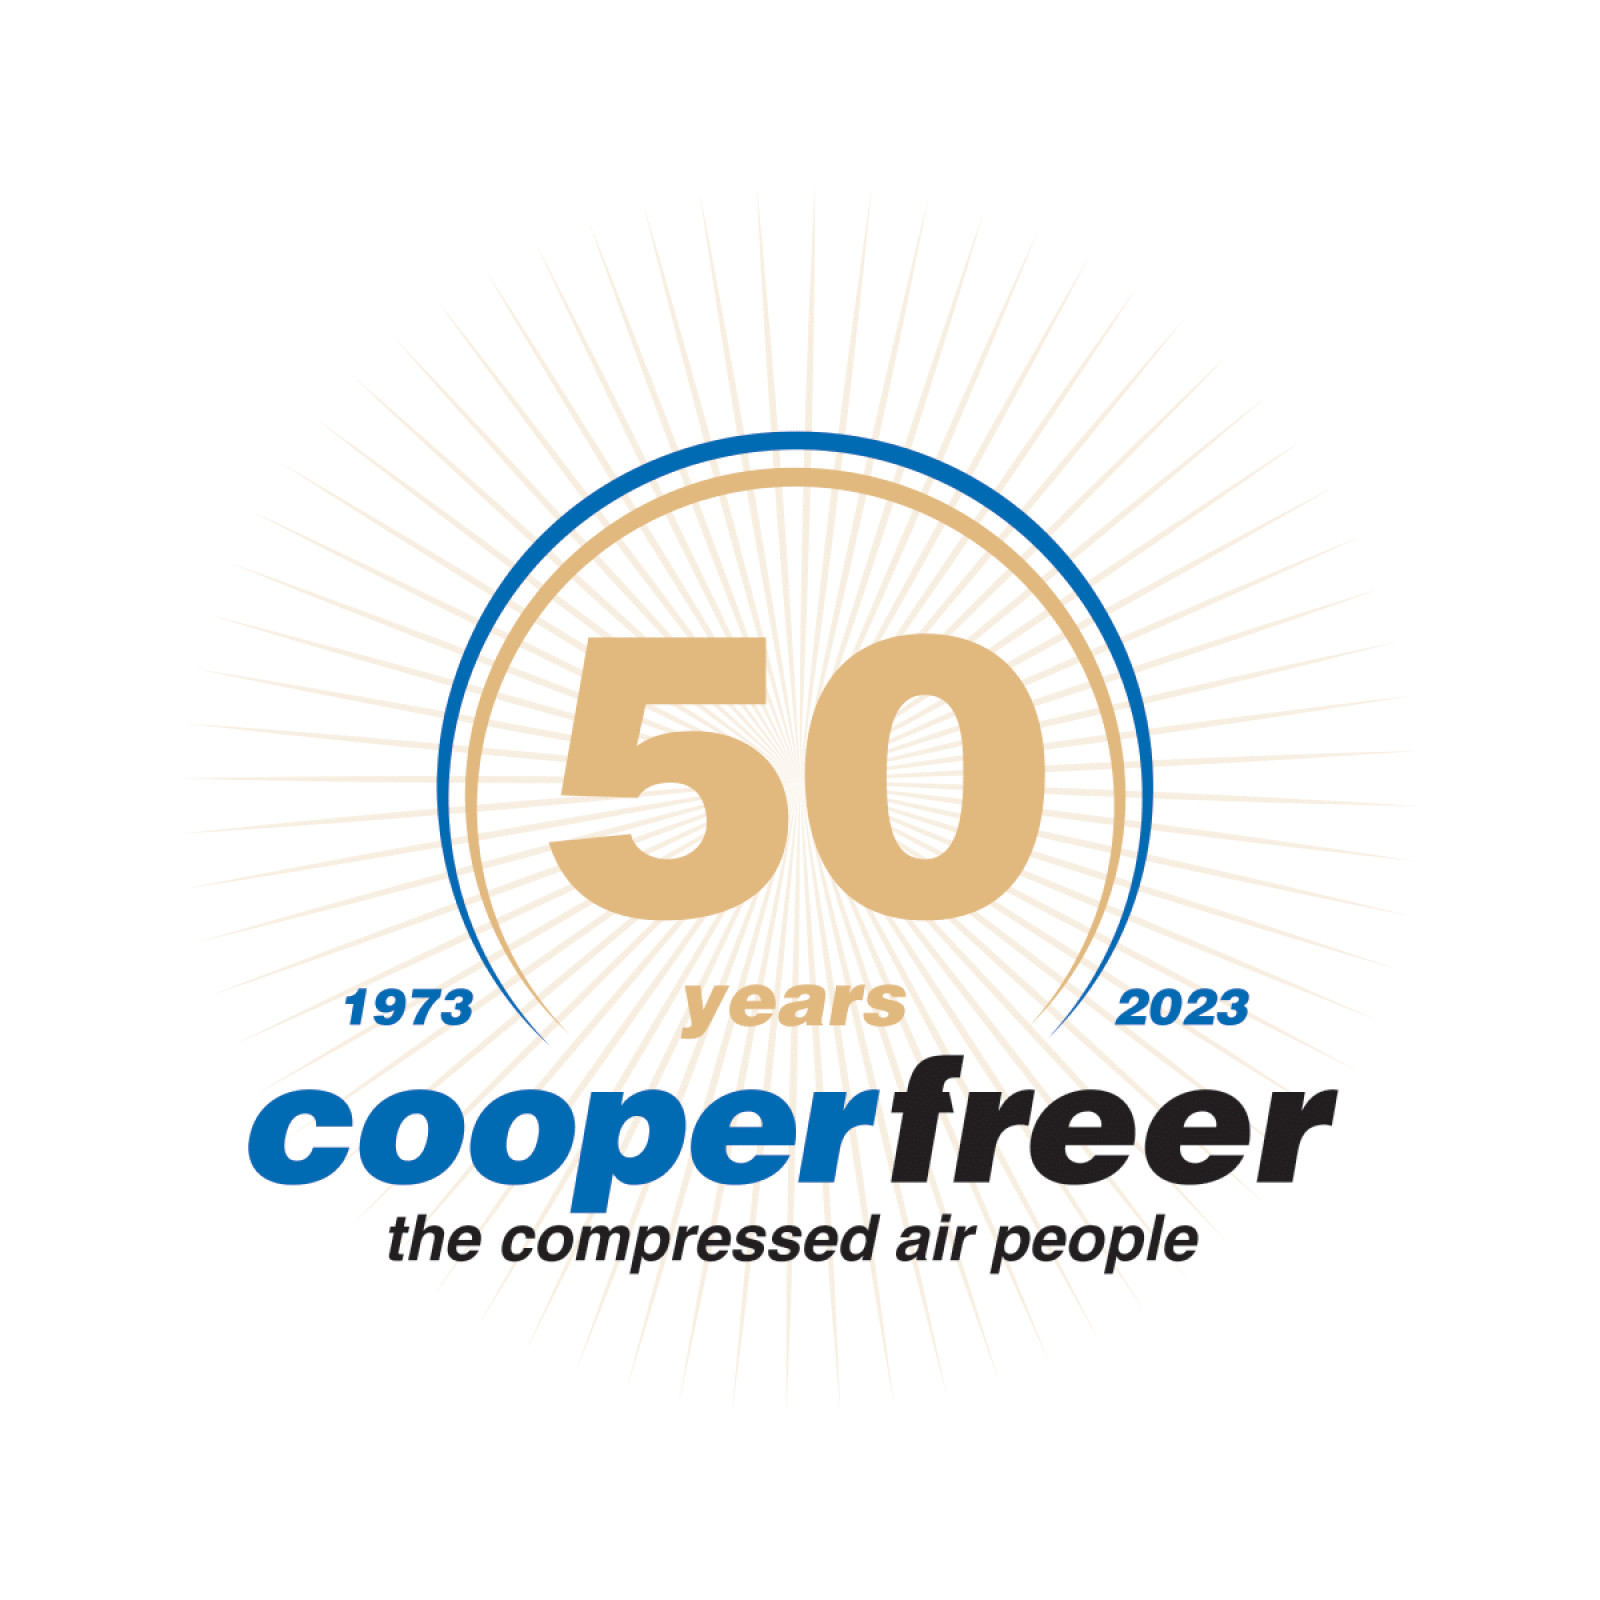 Cooper Freer 50th Anniversary